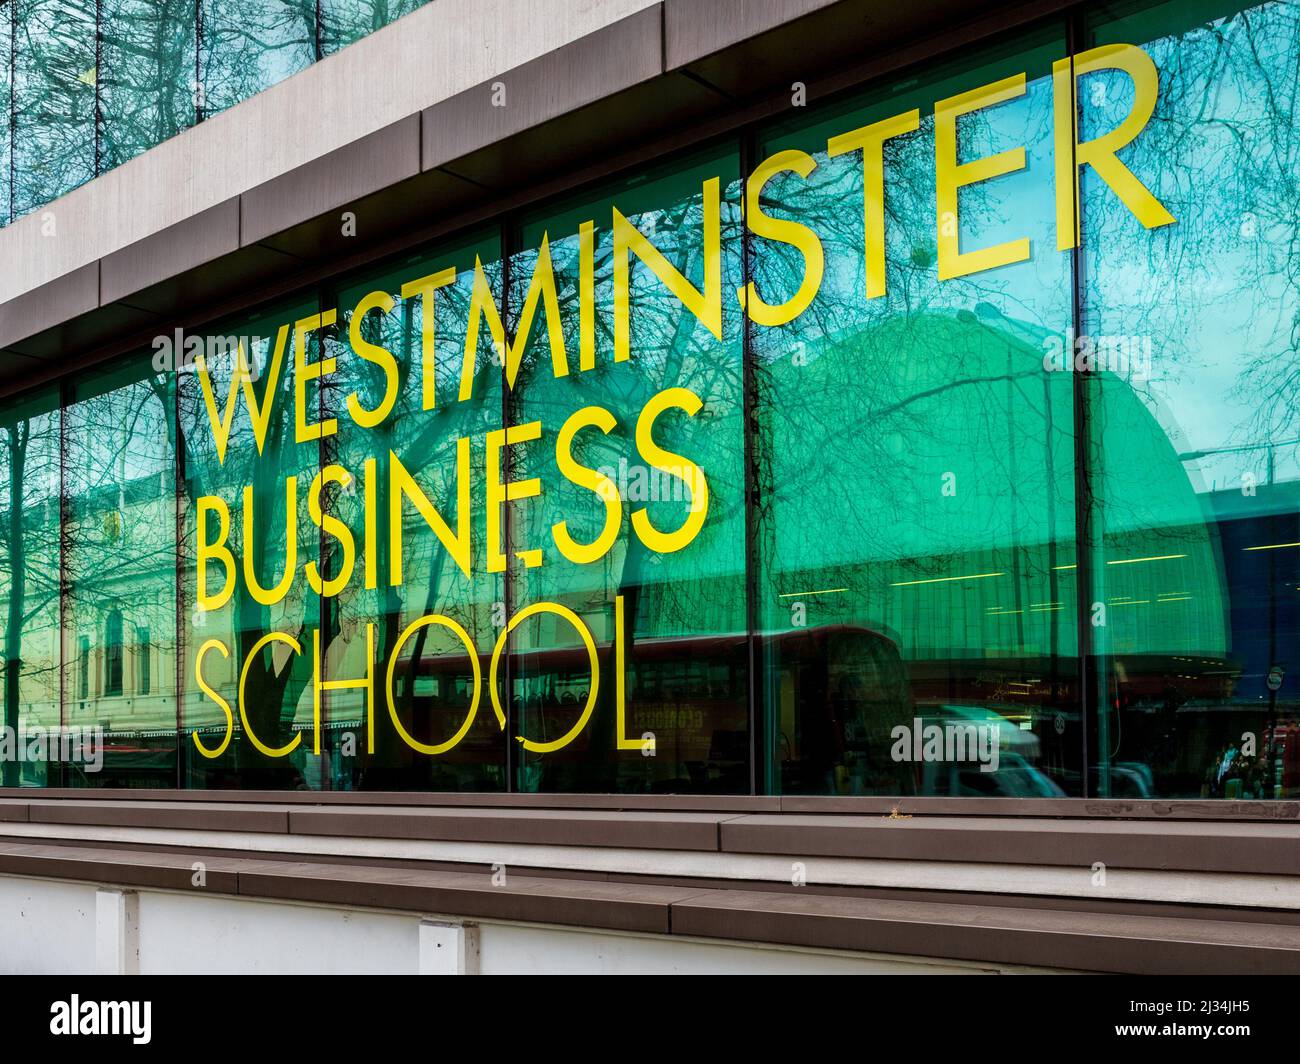 Westminster Business School on Marylebone Road London UK. Westminster Business School (WBS) is the business school of the University of Westminster. Stock Photo